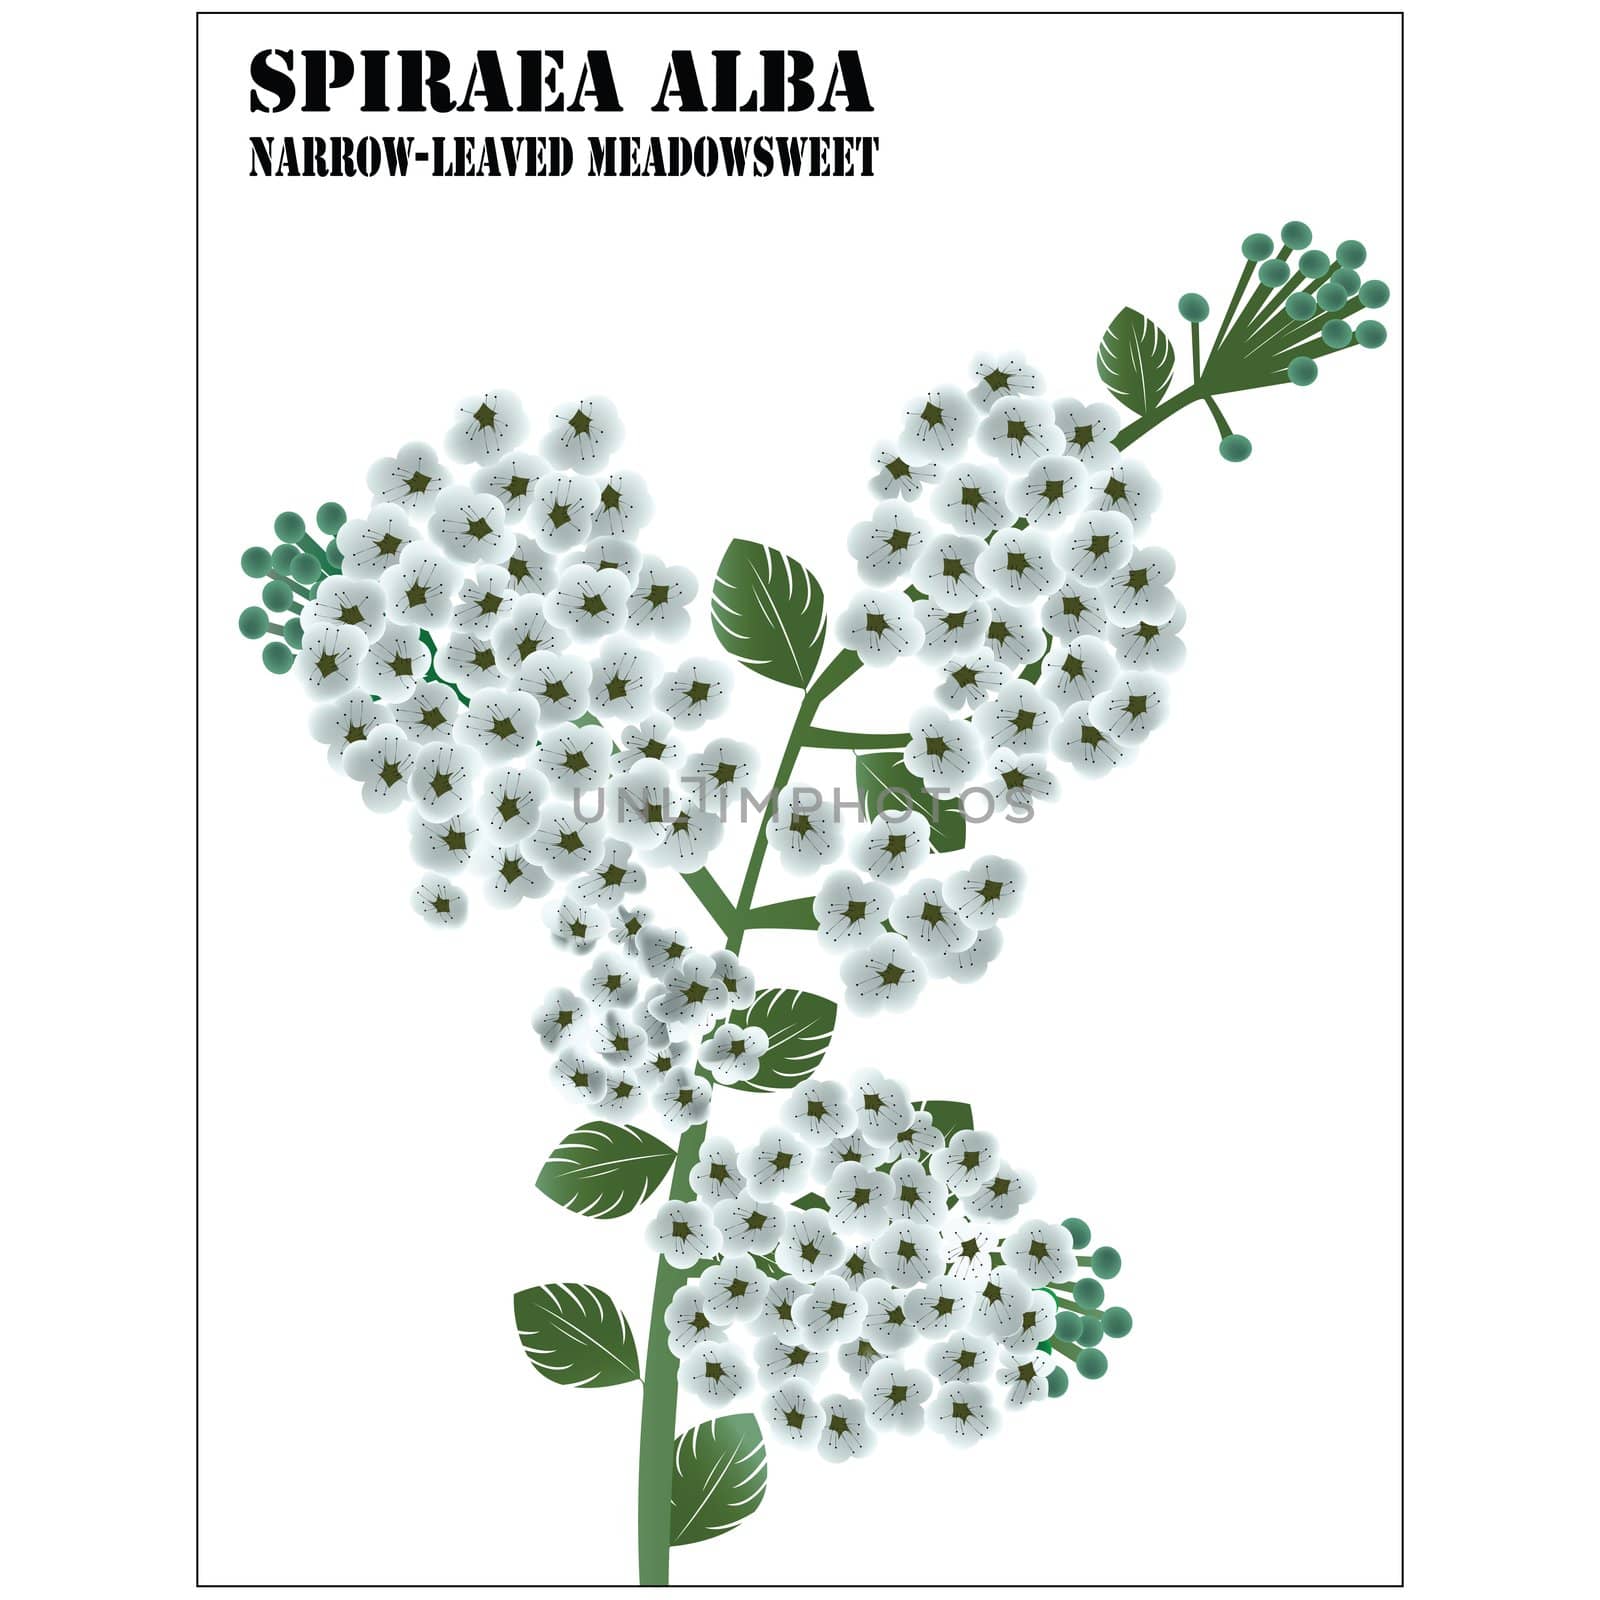 Spiraea Alba by Lirch